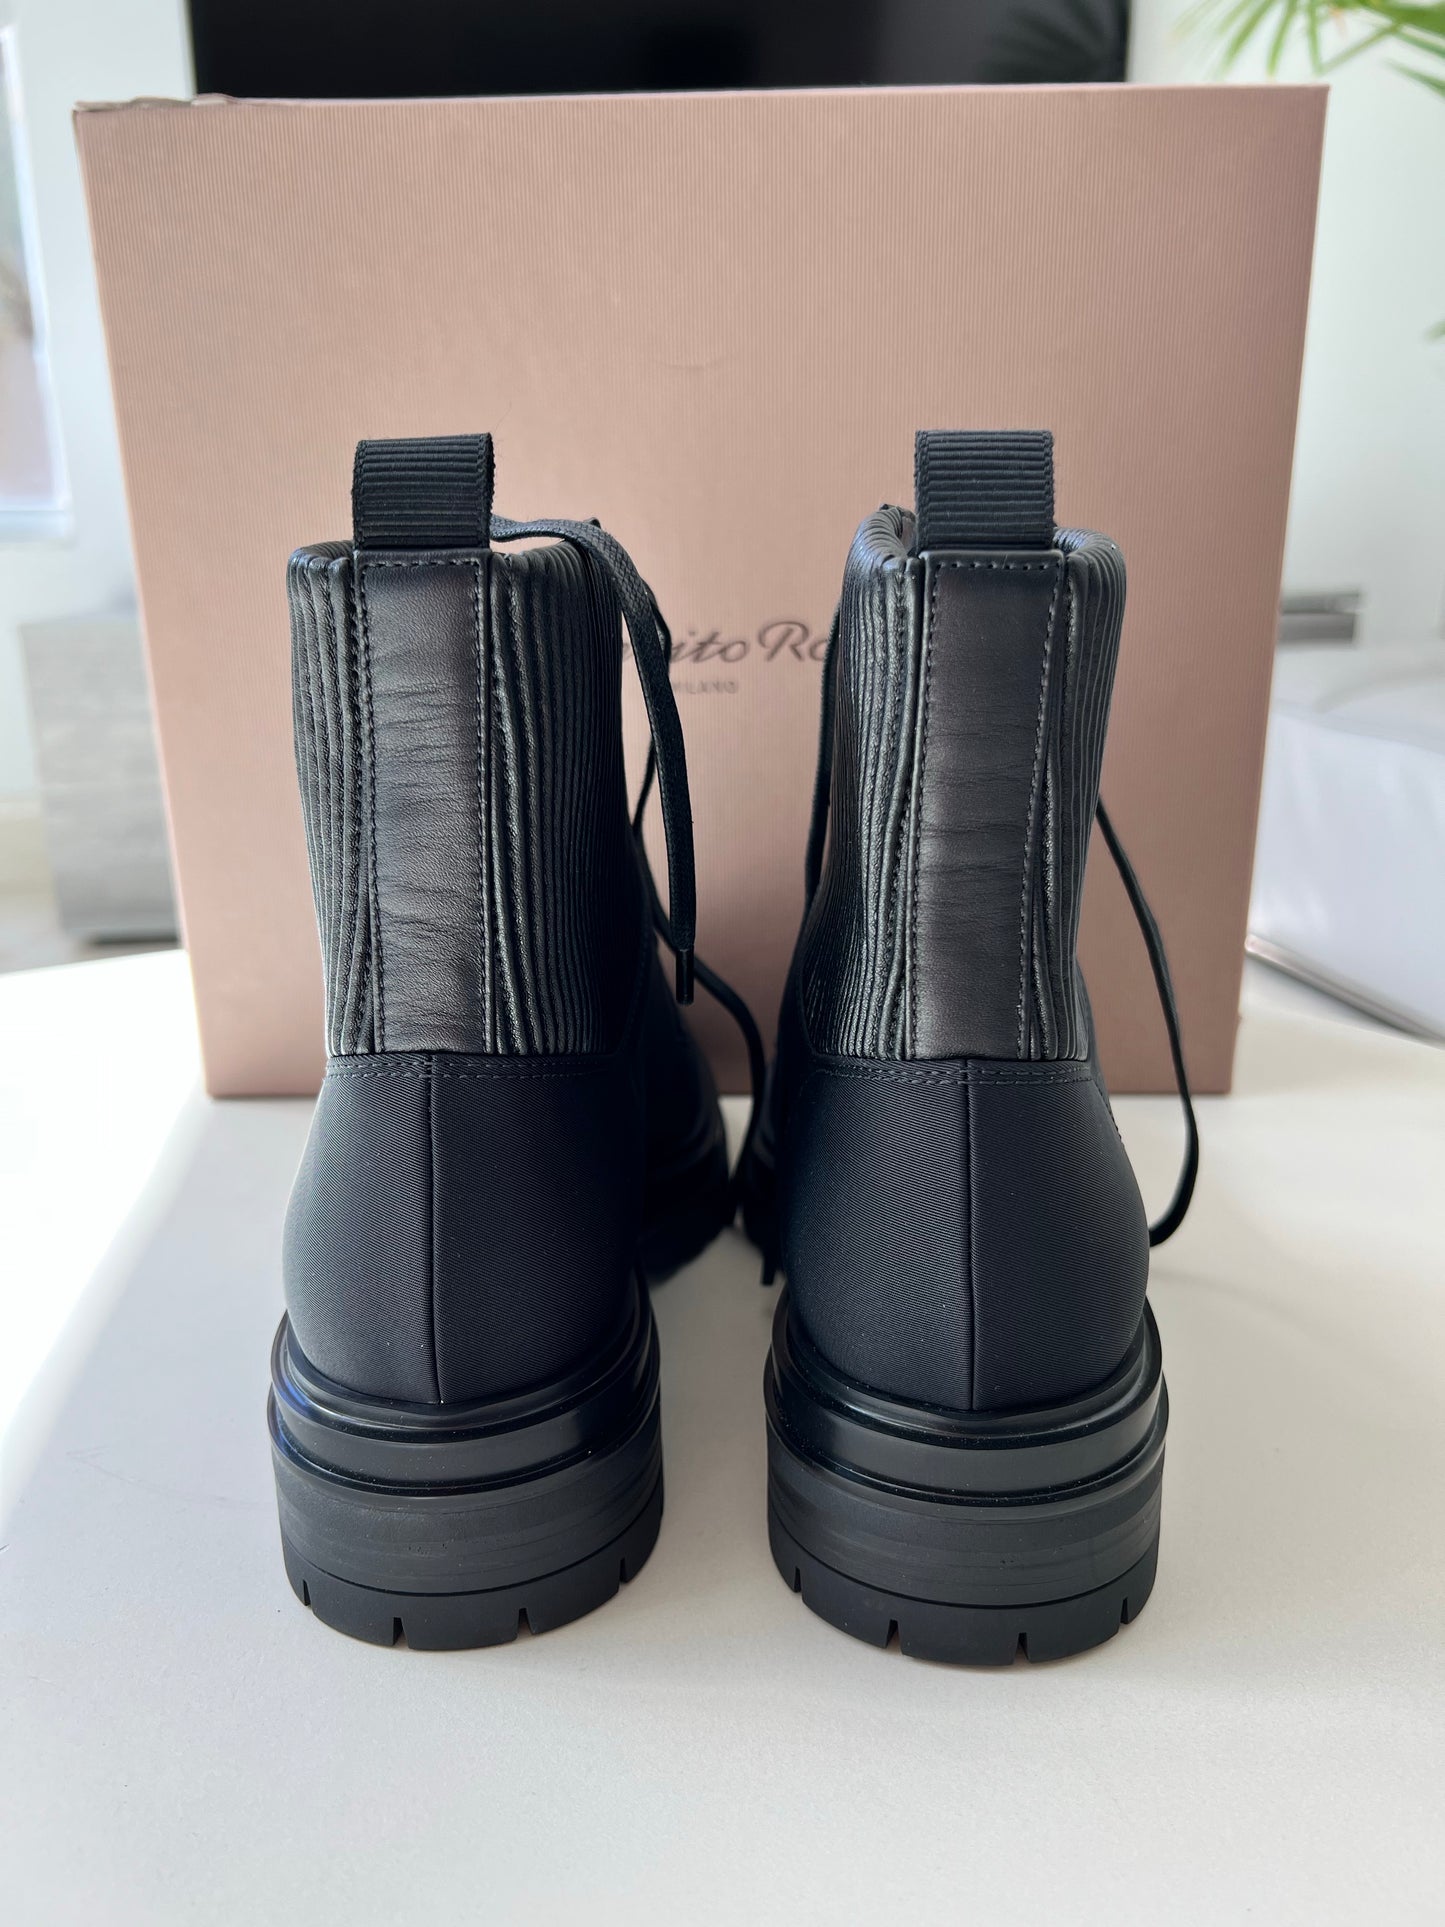 Gianvito Rossi Martis Black Combat Nylon Leather Boots